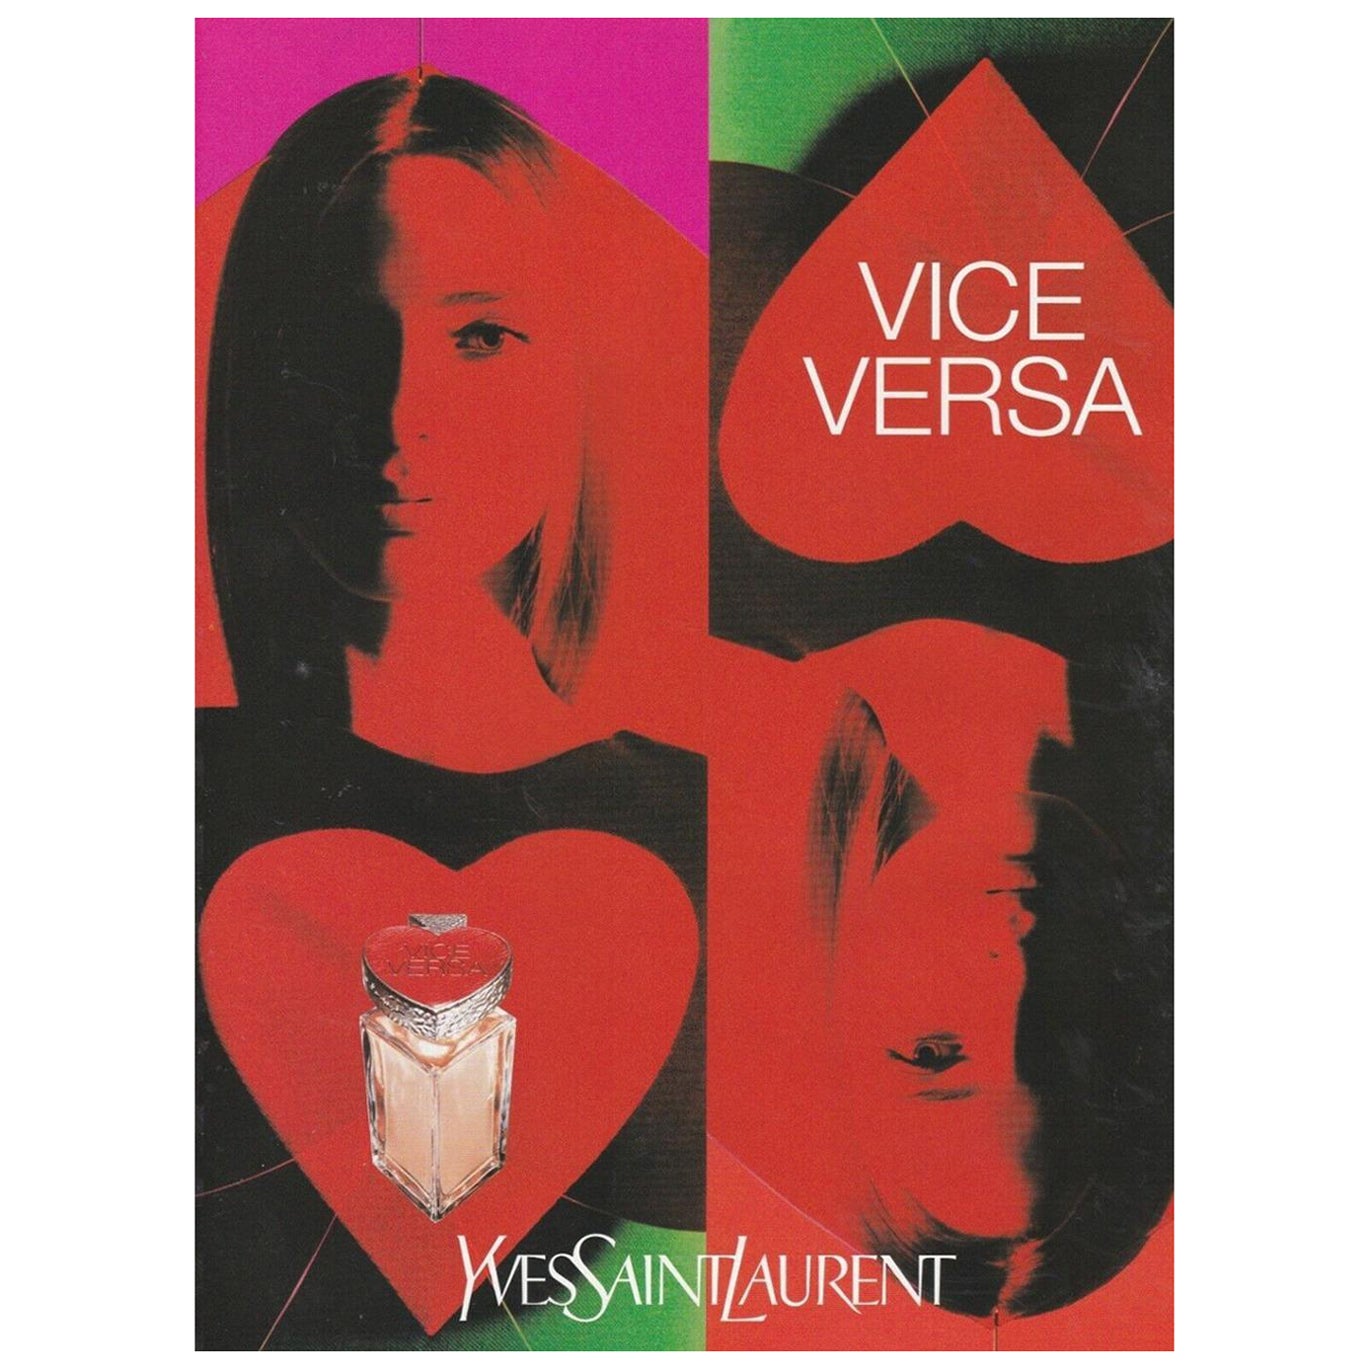 1999 Yves Saint Laurent - Vice Versa Original Vintage Poster